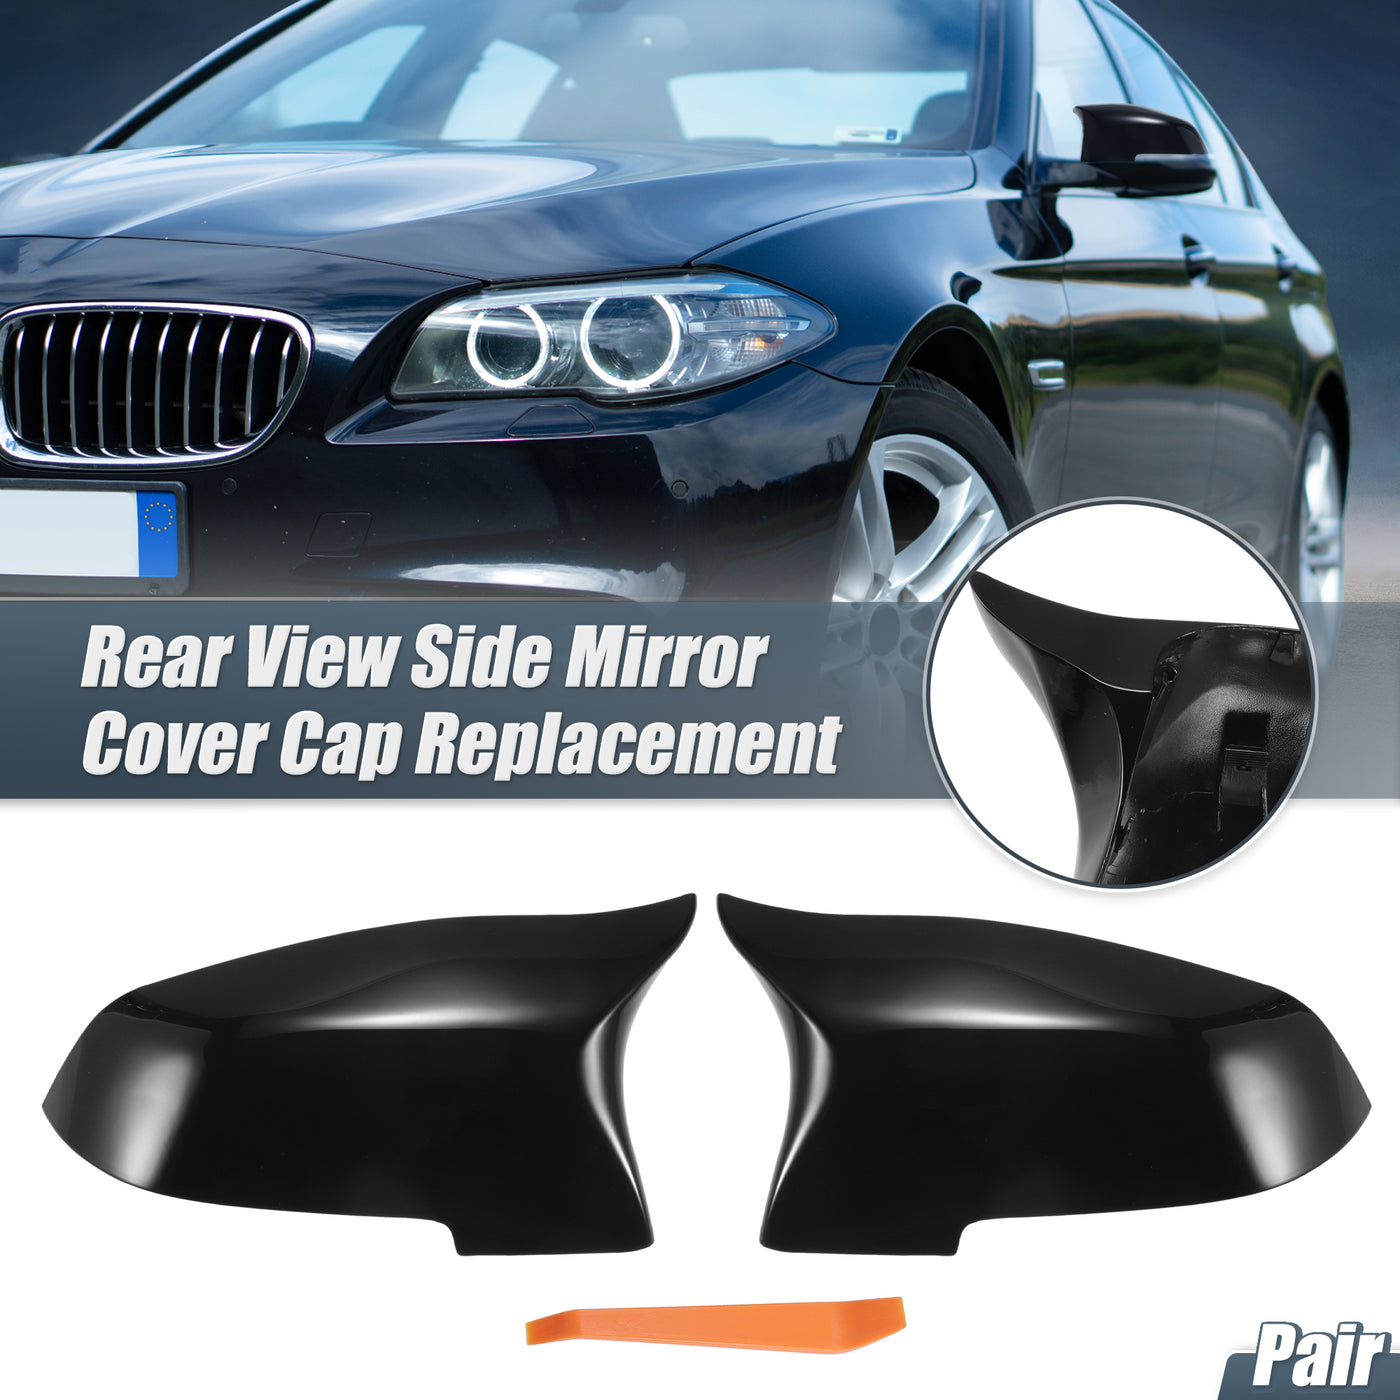 X AUTOHAUX Pair Car Rear View Driver Passenger Side Mirror Cover Cap Replacement Gloss Black for BMW F10 F11 F18 GT F07 F06 F12 F13 F01 F02 2014-2016 Mirror Guard Covers